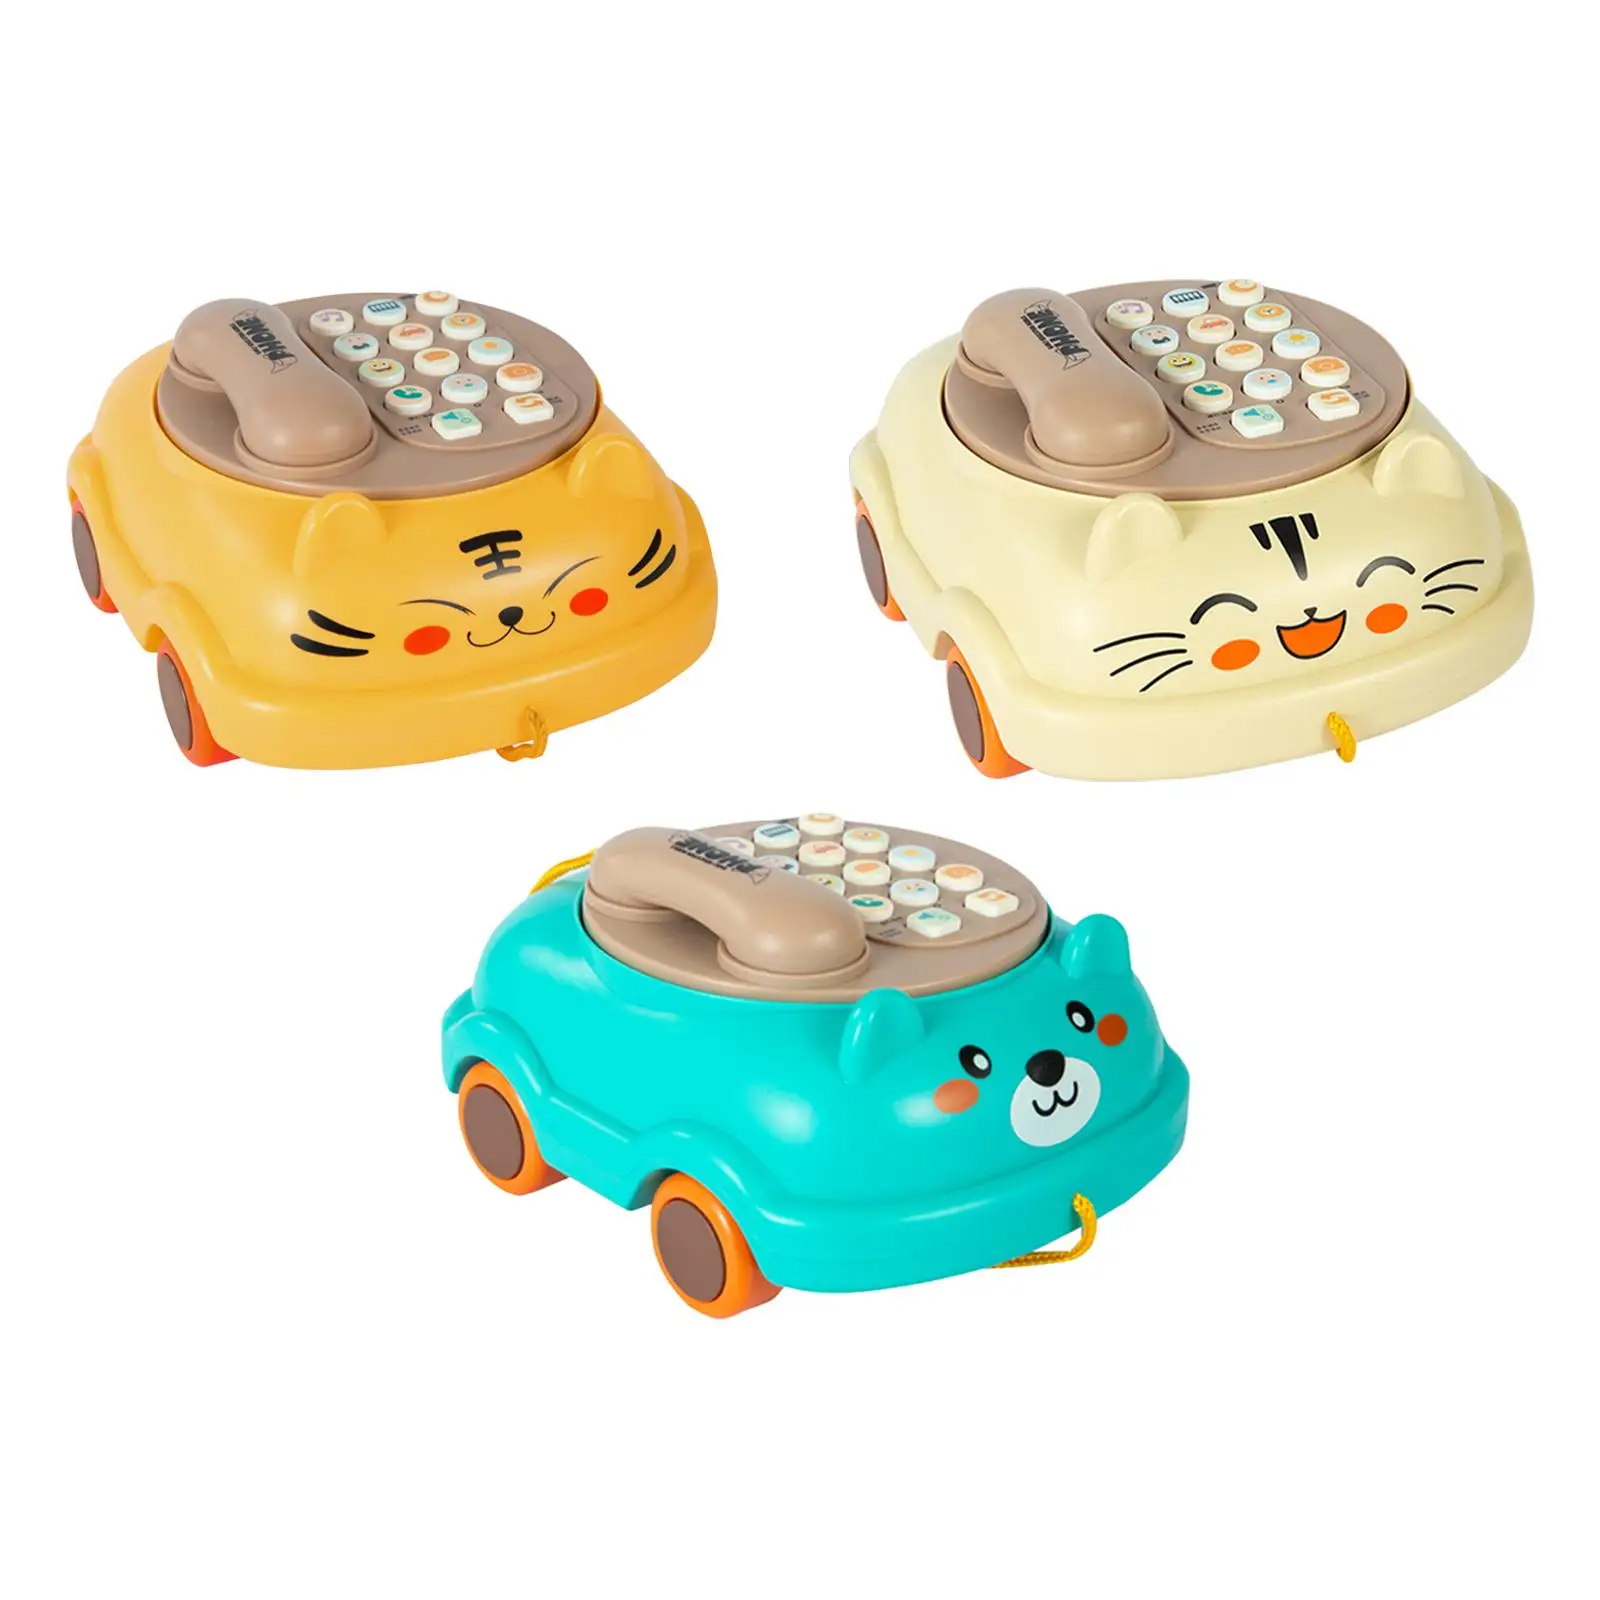 Cognitive Development Games Baby Phones Toy Phone for Preschool Educational